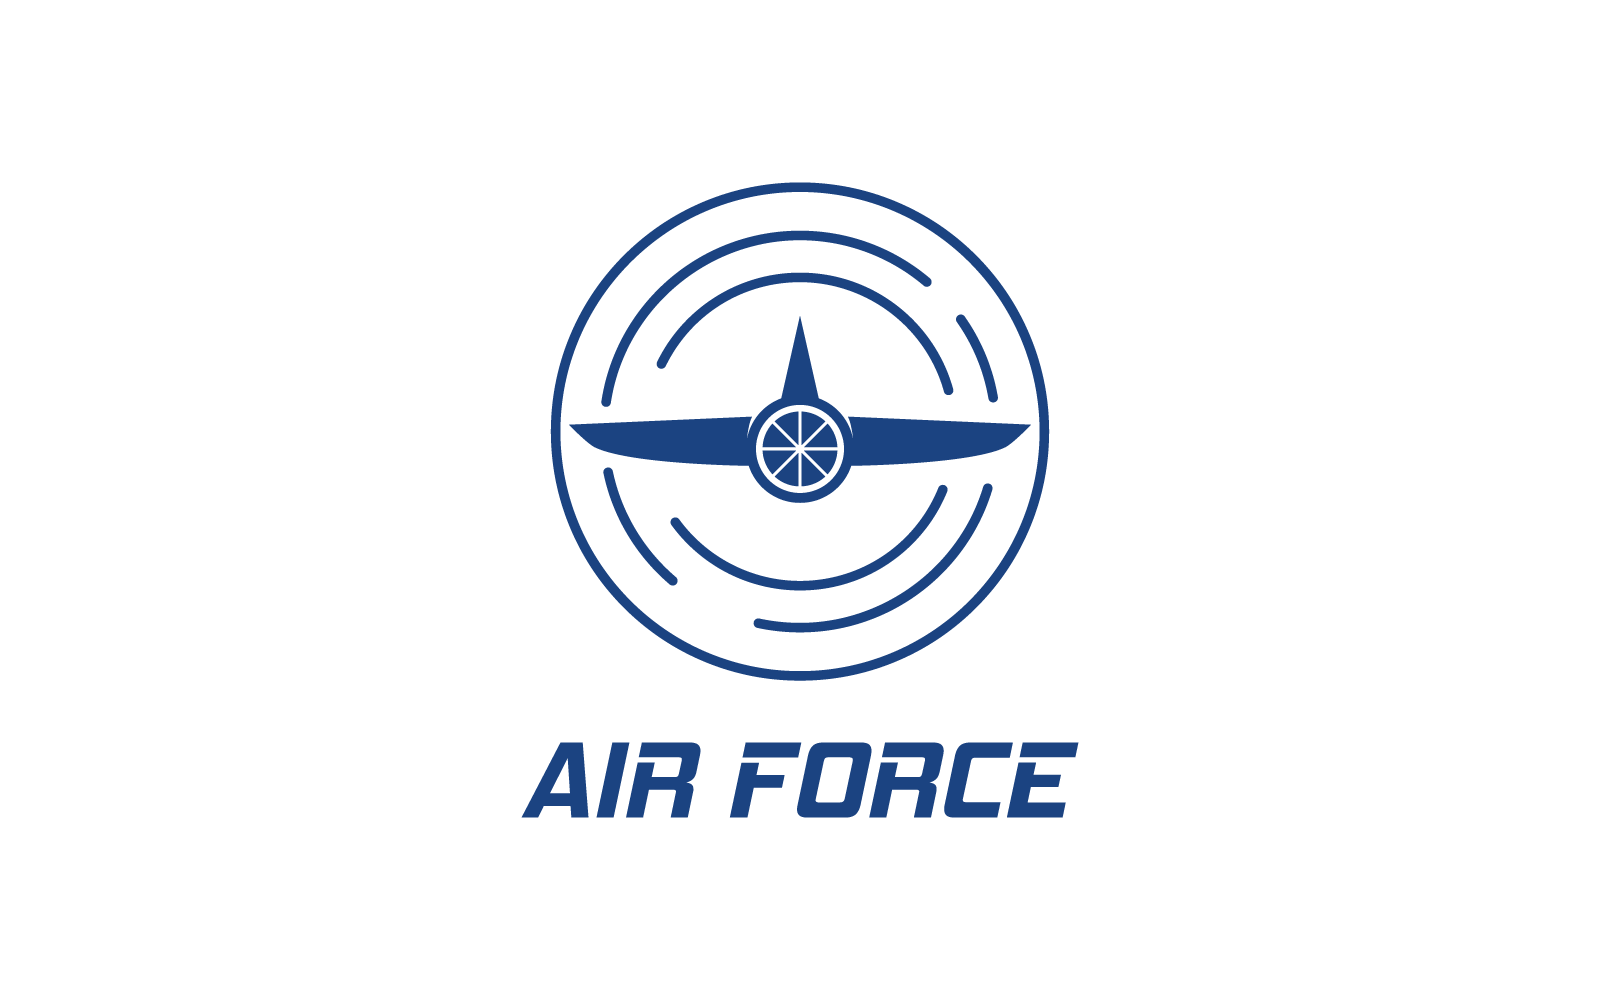 Air force plane military illustration logo vector design